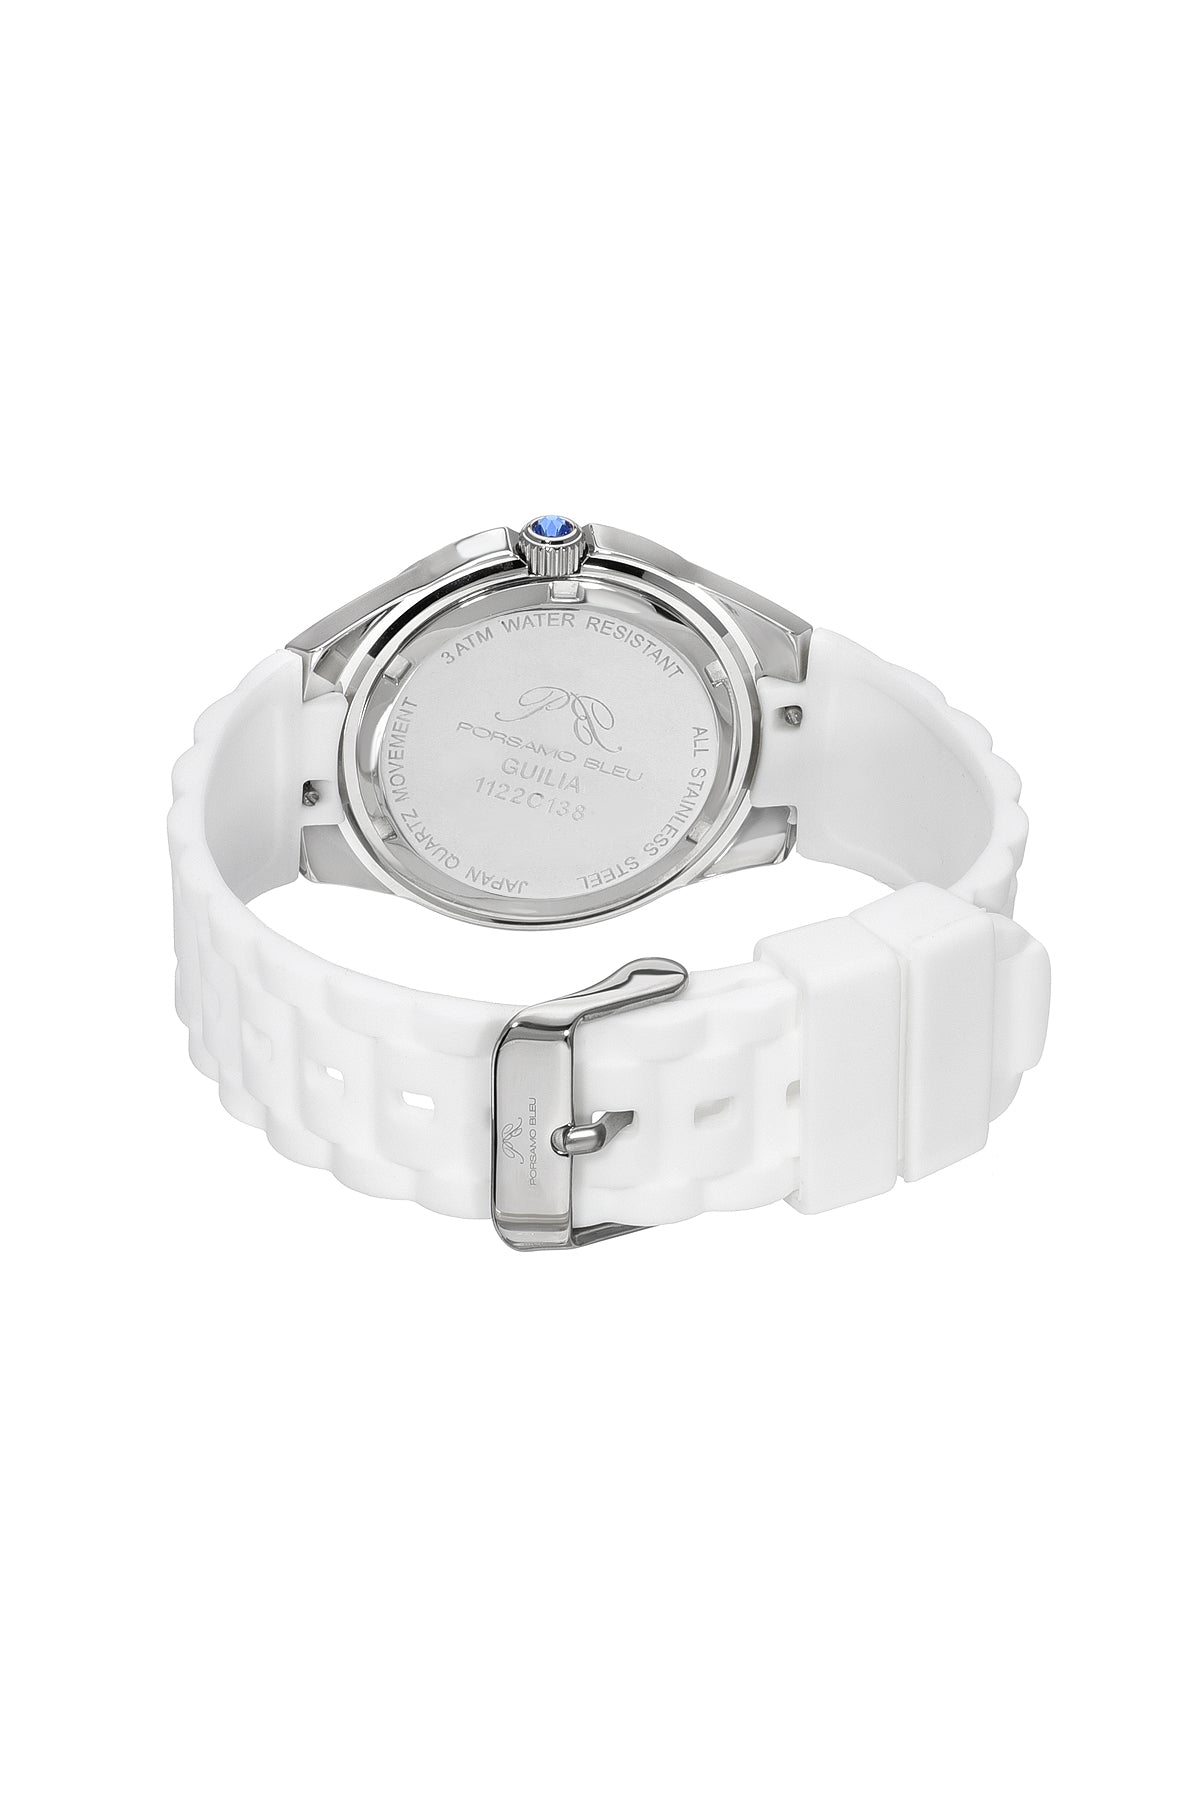 Porsamo Bleu Guilia Luxury Women's Silicone Strap Watch, Interchangeable Bands, Silver, White, Turquoise 1122CGUR